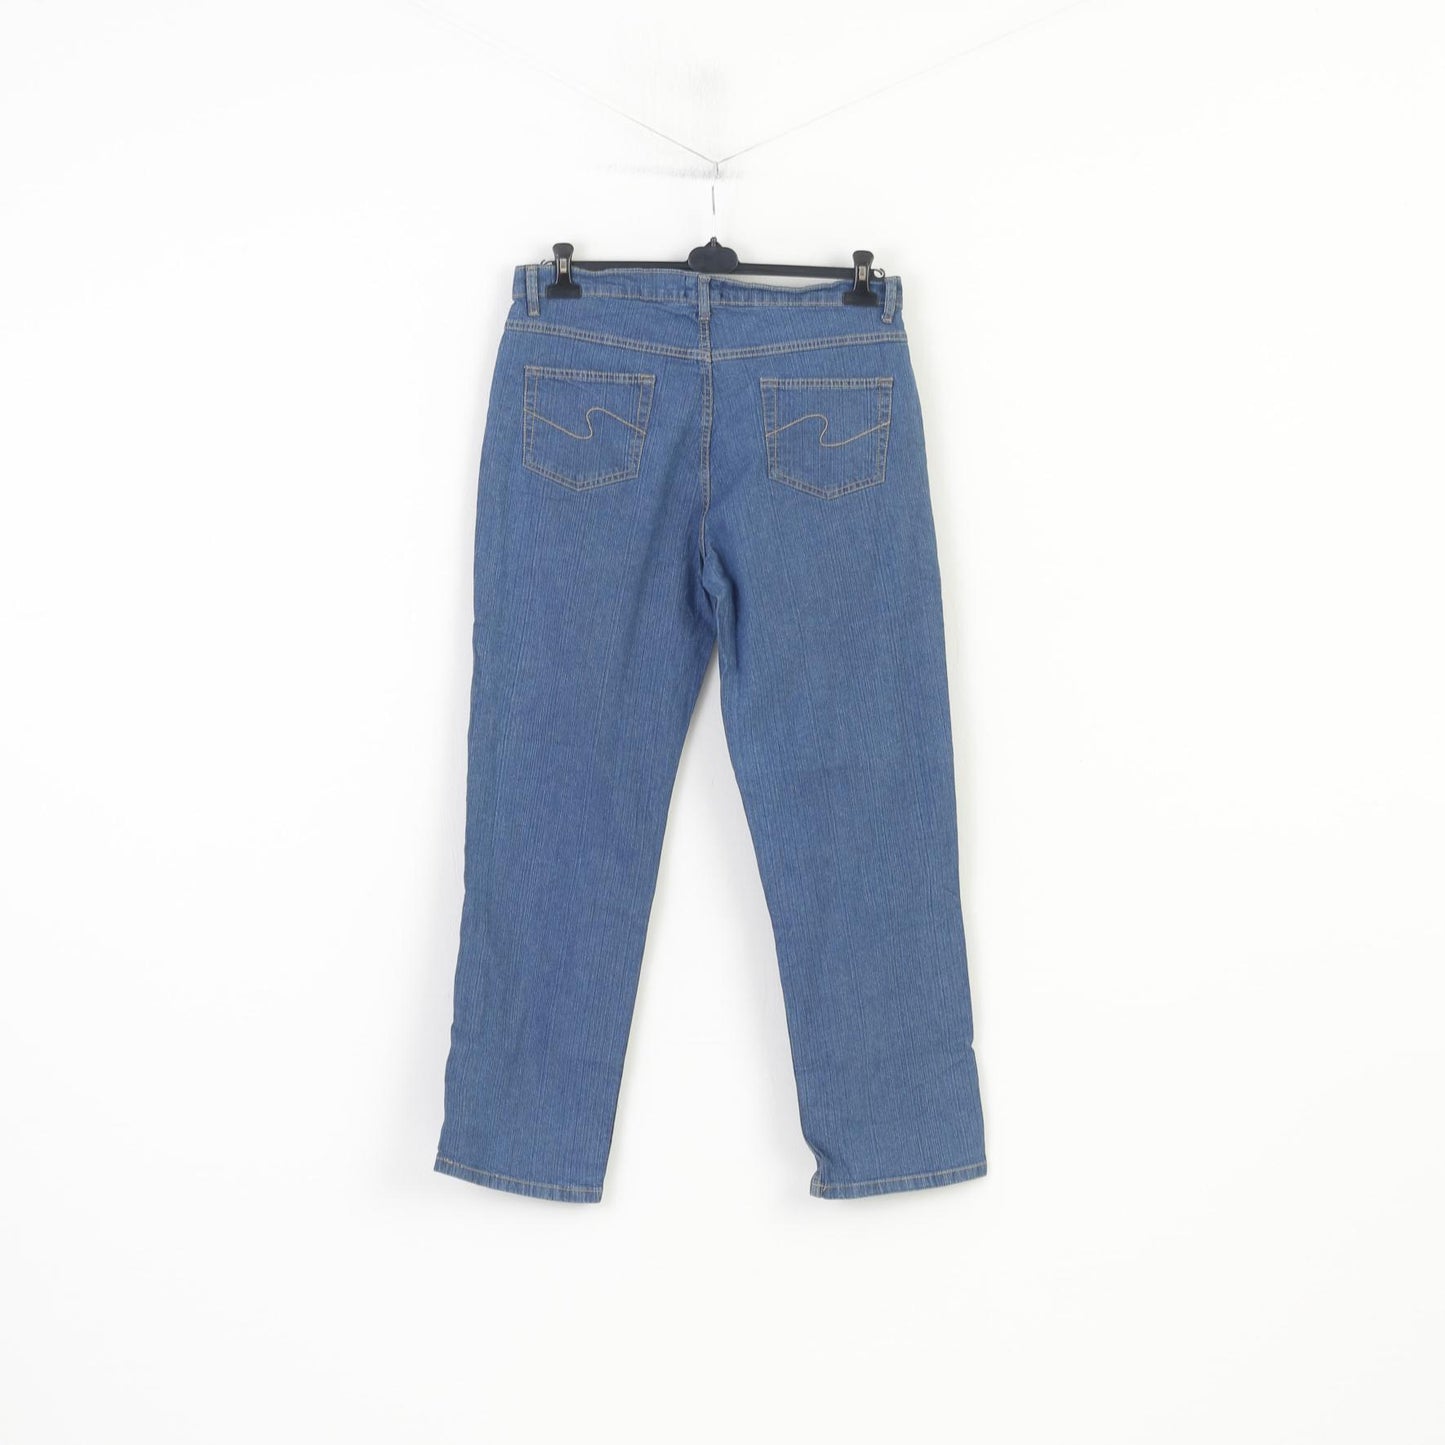 Pantaloni Encadee Donna 46 Jeans Denim Pantaloni classici vintage in cotone blu 